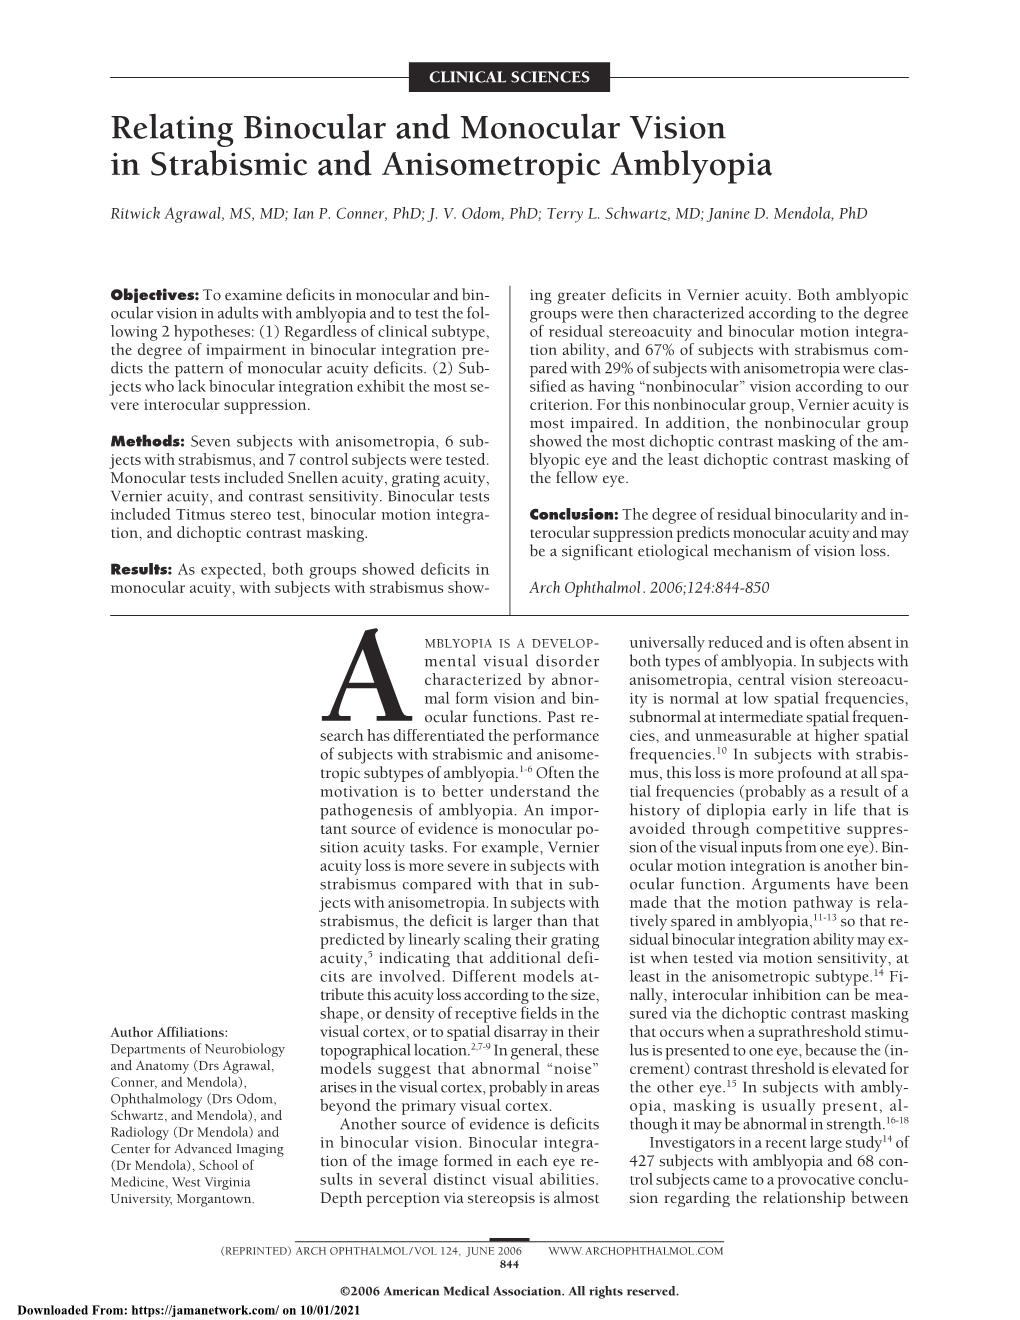 Relating Binocular and Monocular Vision in Strabismic and Anisometropic Amblyopia